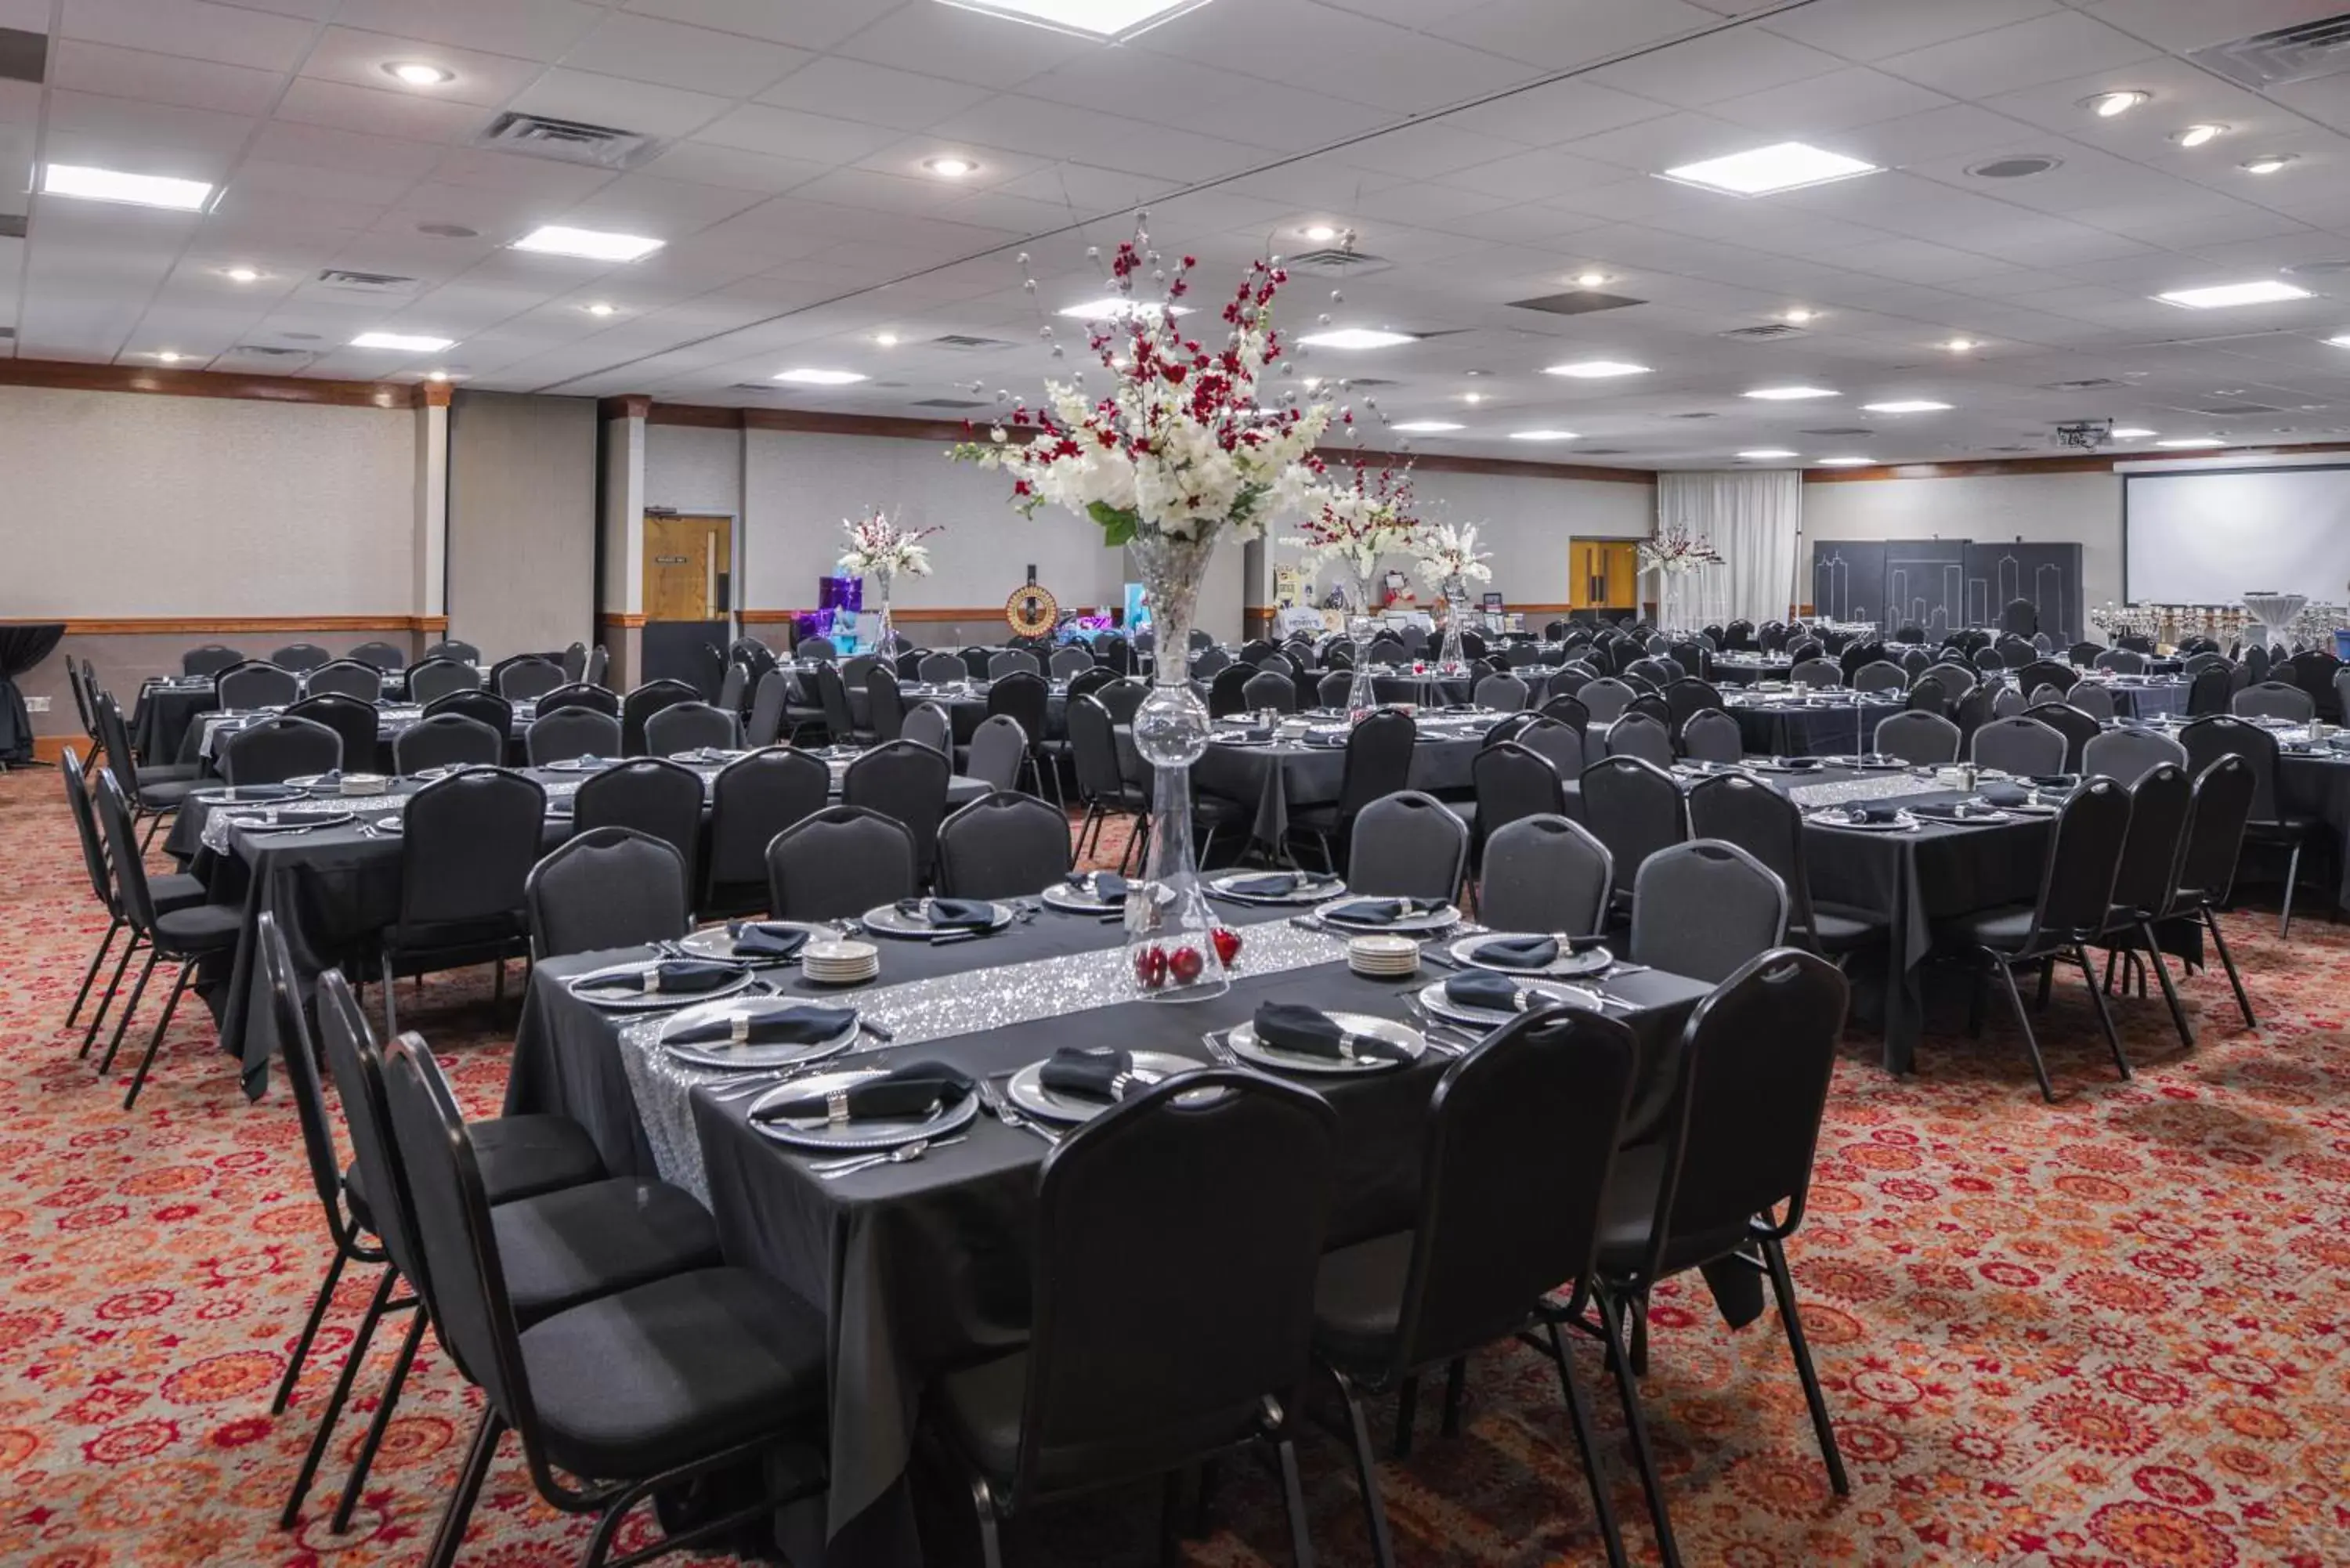 Banquet/Function facilities, Banquet Facilities in Best Western Kelly Inn - Yankton